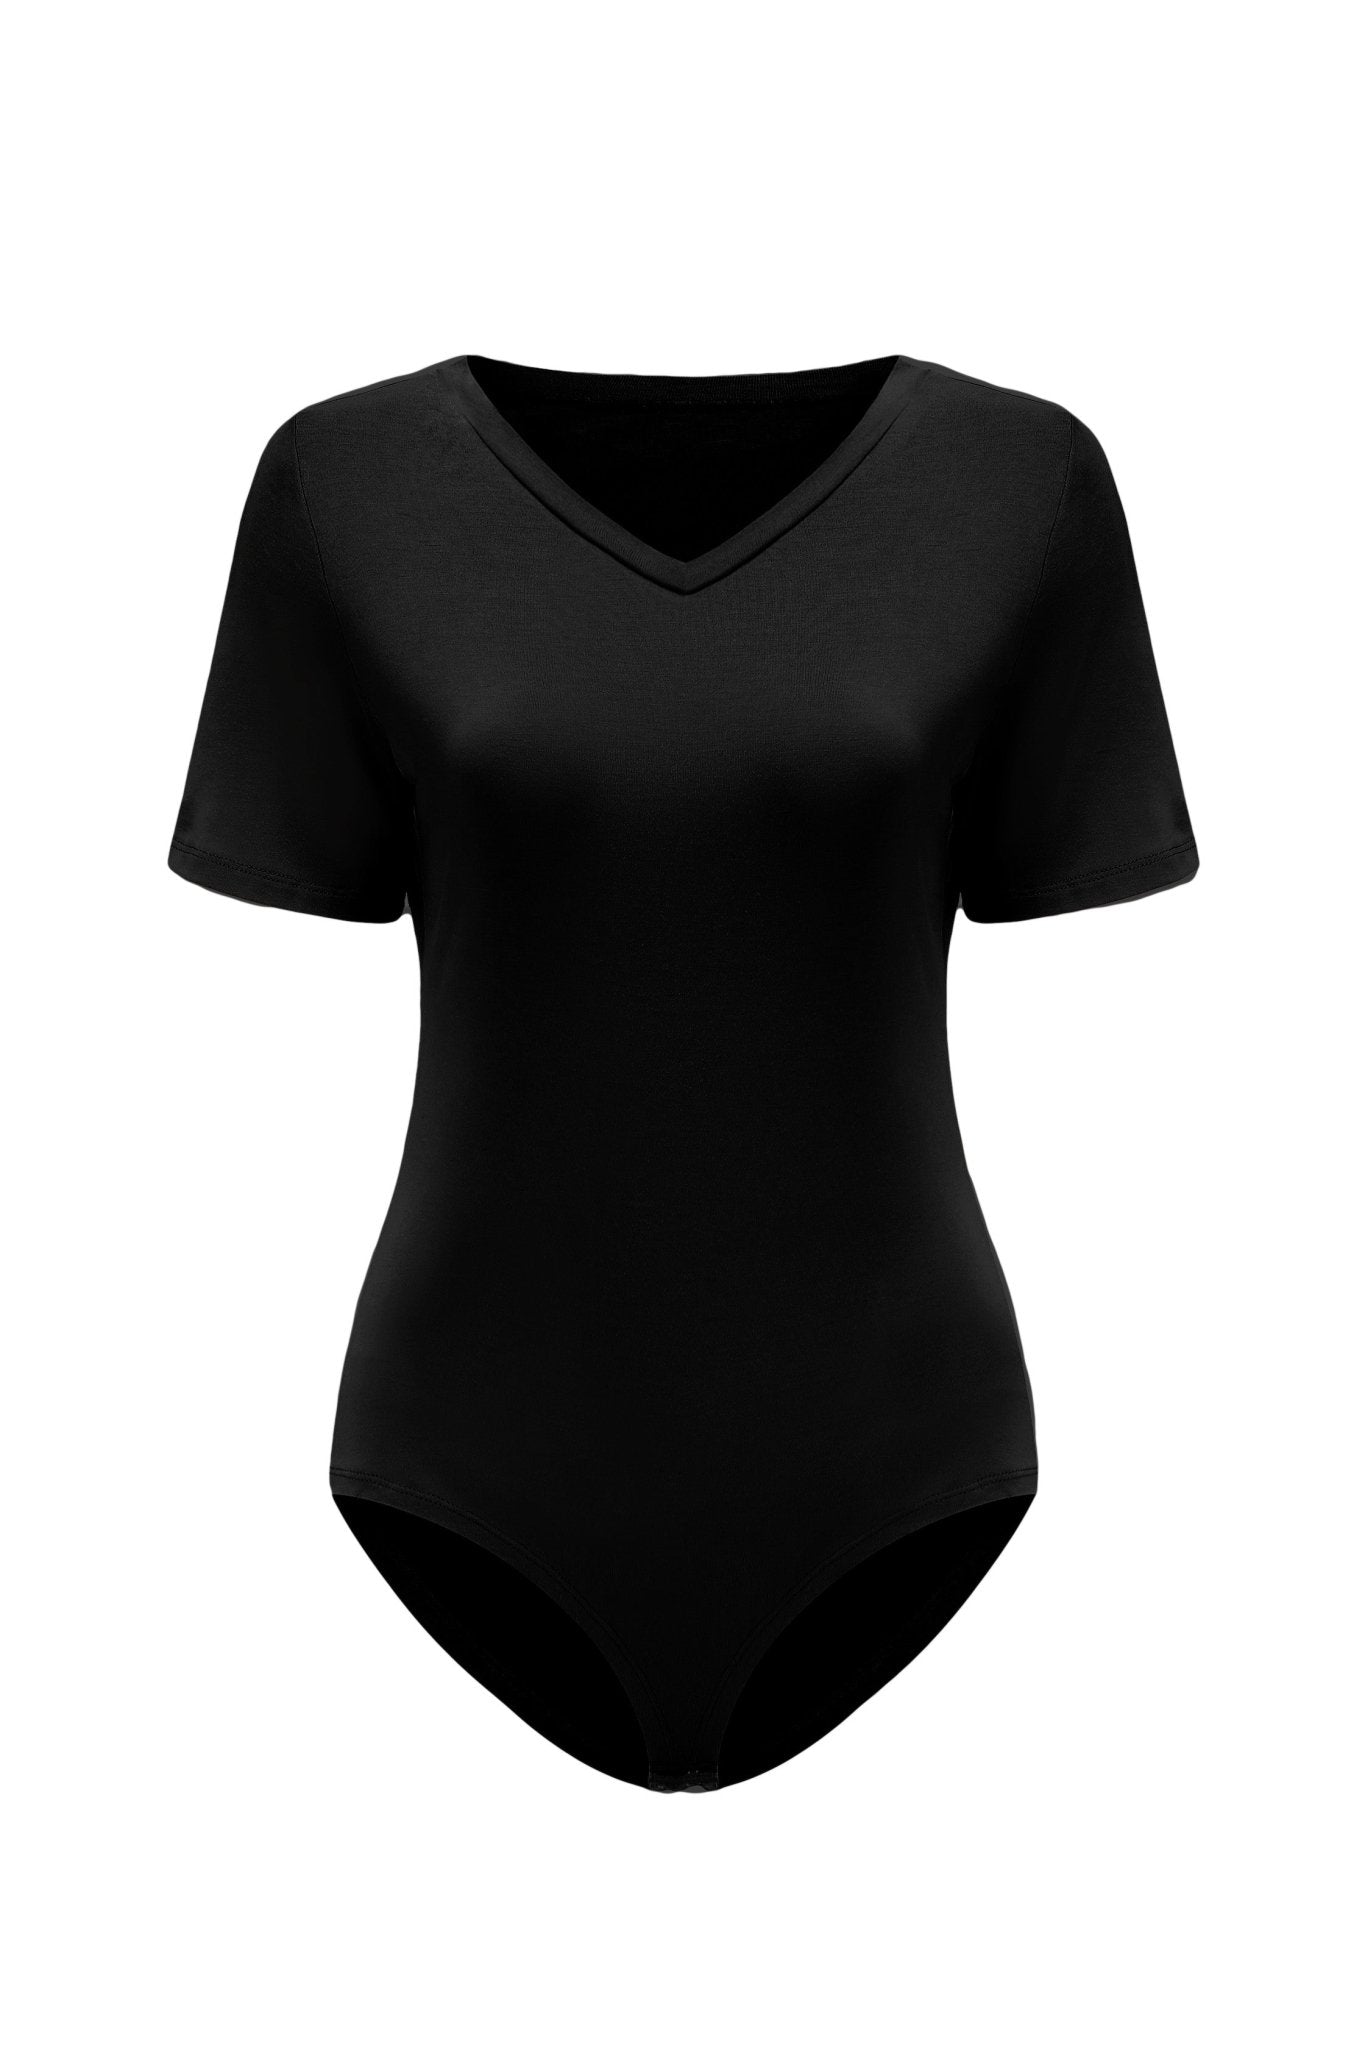 POSESHE Women's Plus Size Bodysuit V neck Short Long Sleeves Casual Basic  Bodysuit Tops Jumpsuit T-shirts